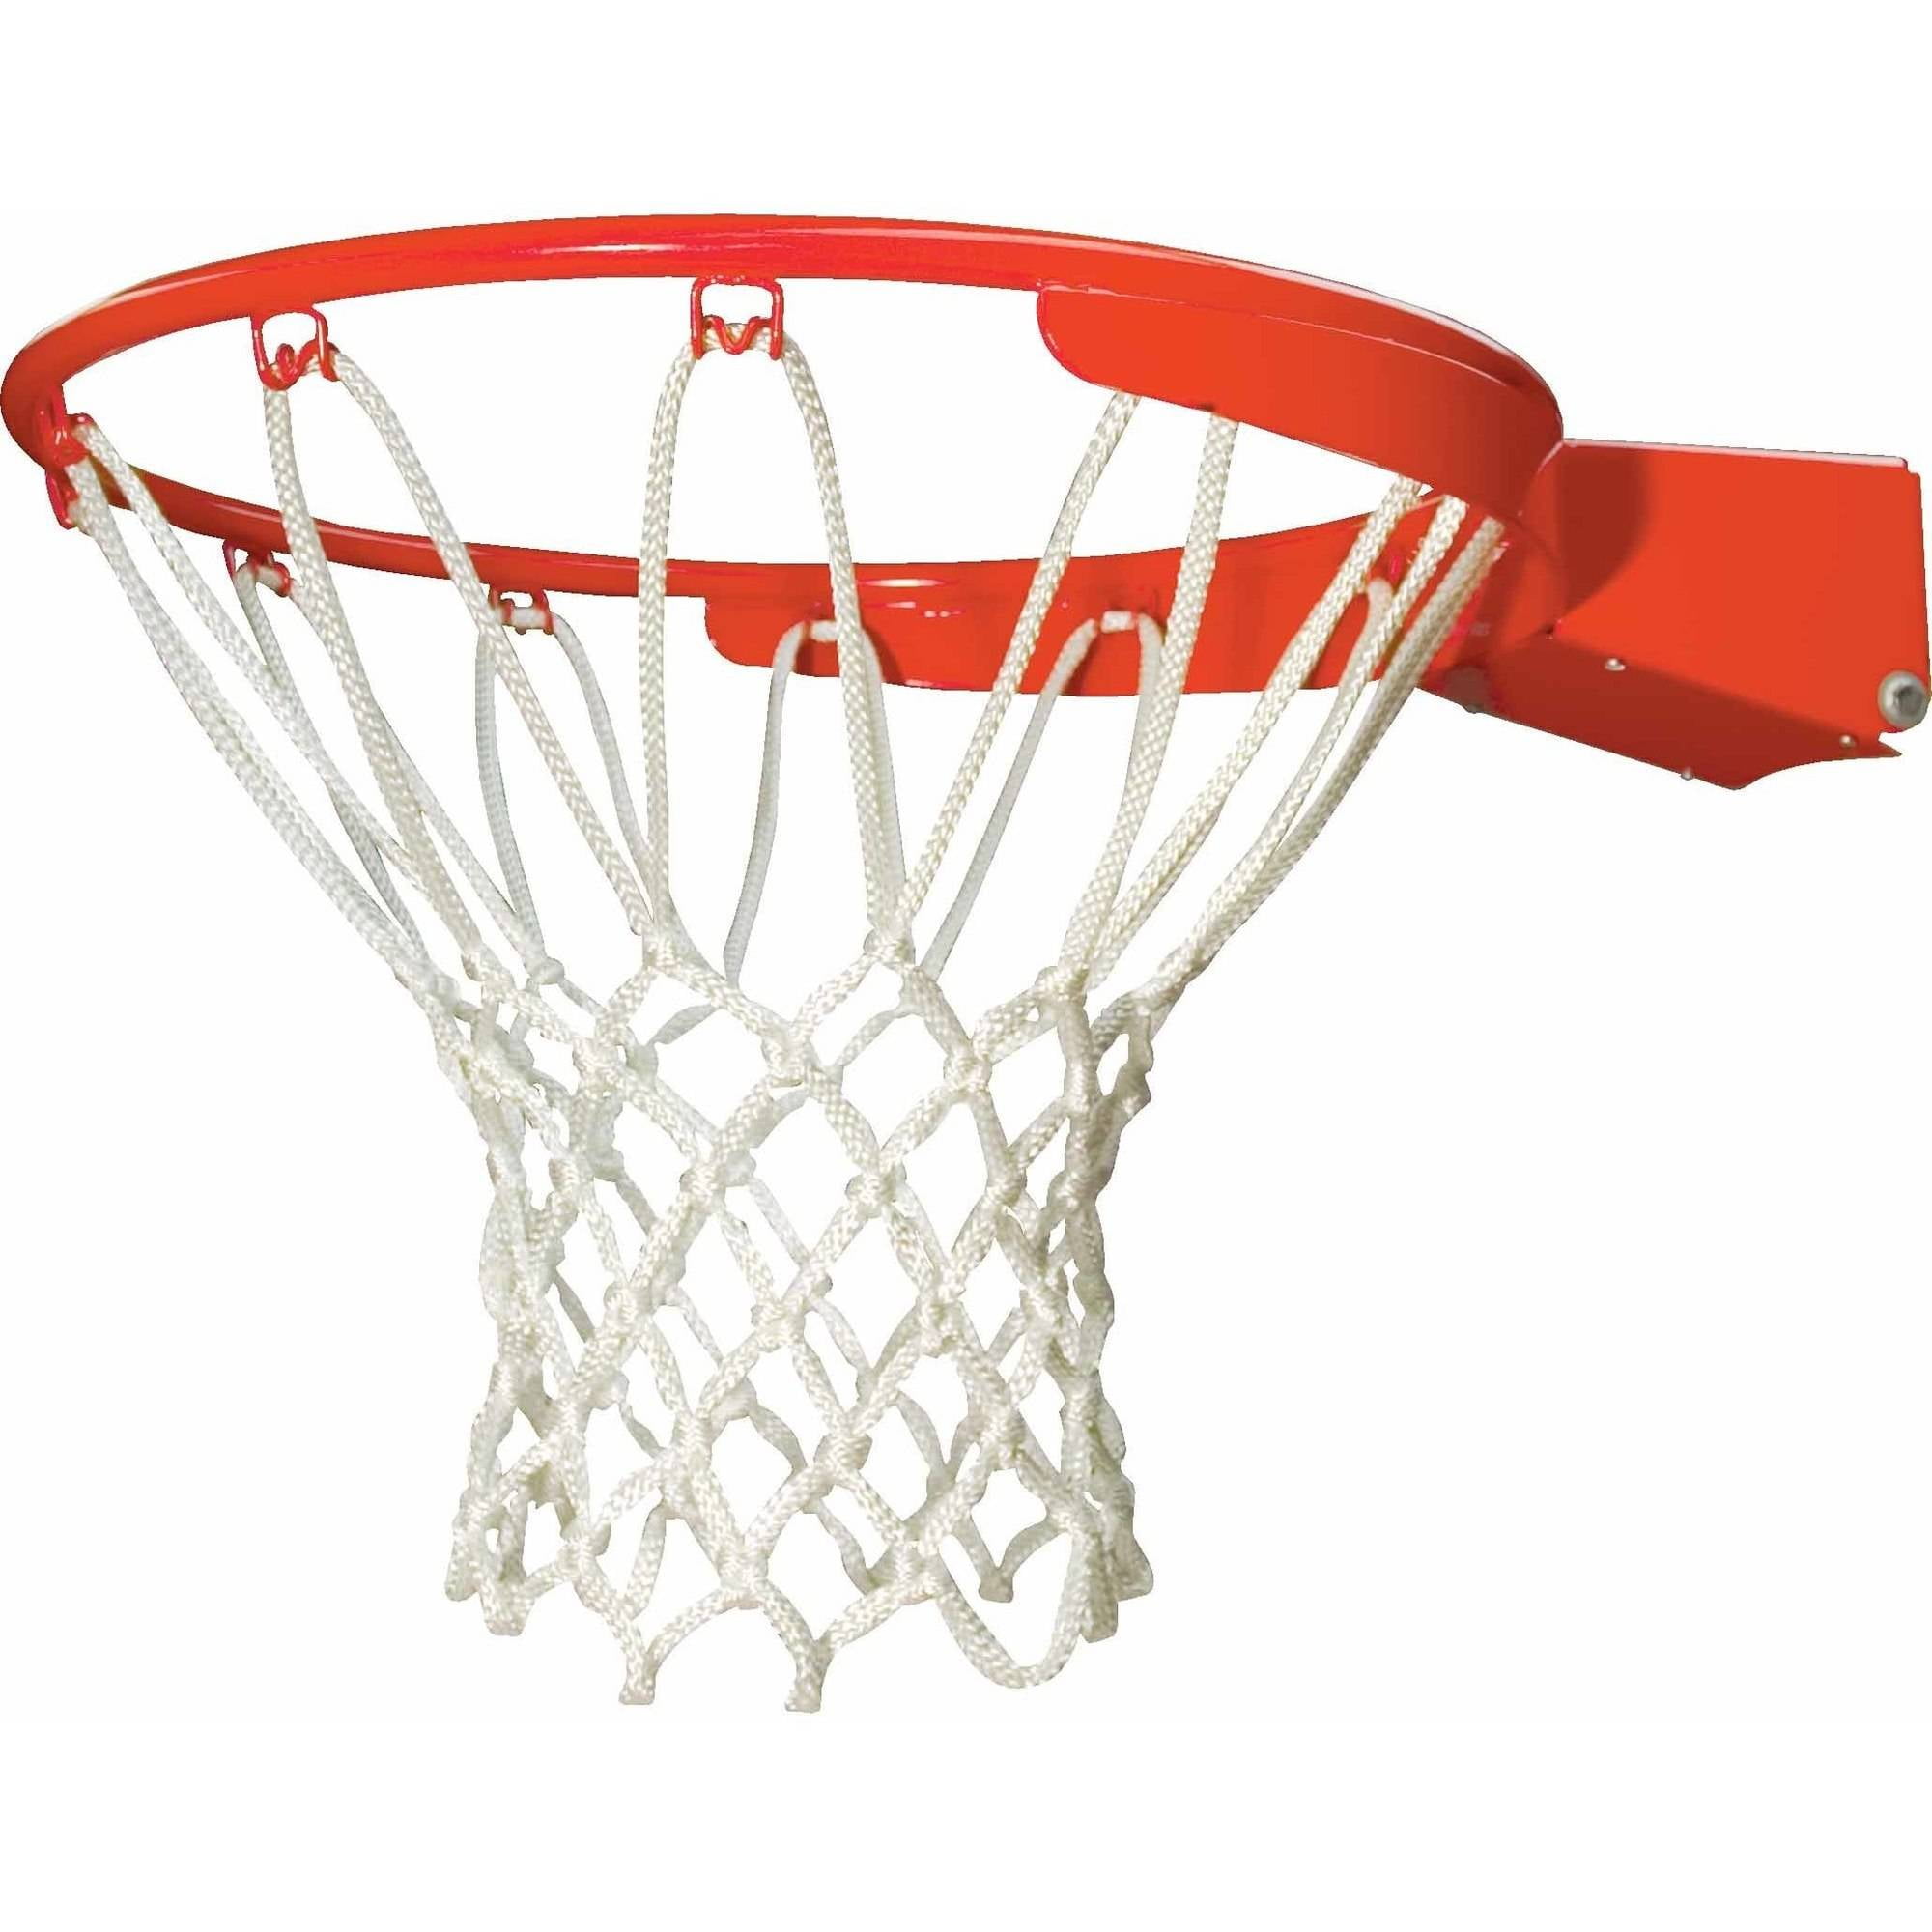 Replacement Basketball Net Nylon All Weather Hoop Goal Outdoor Rim Standard H6M4 